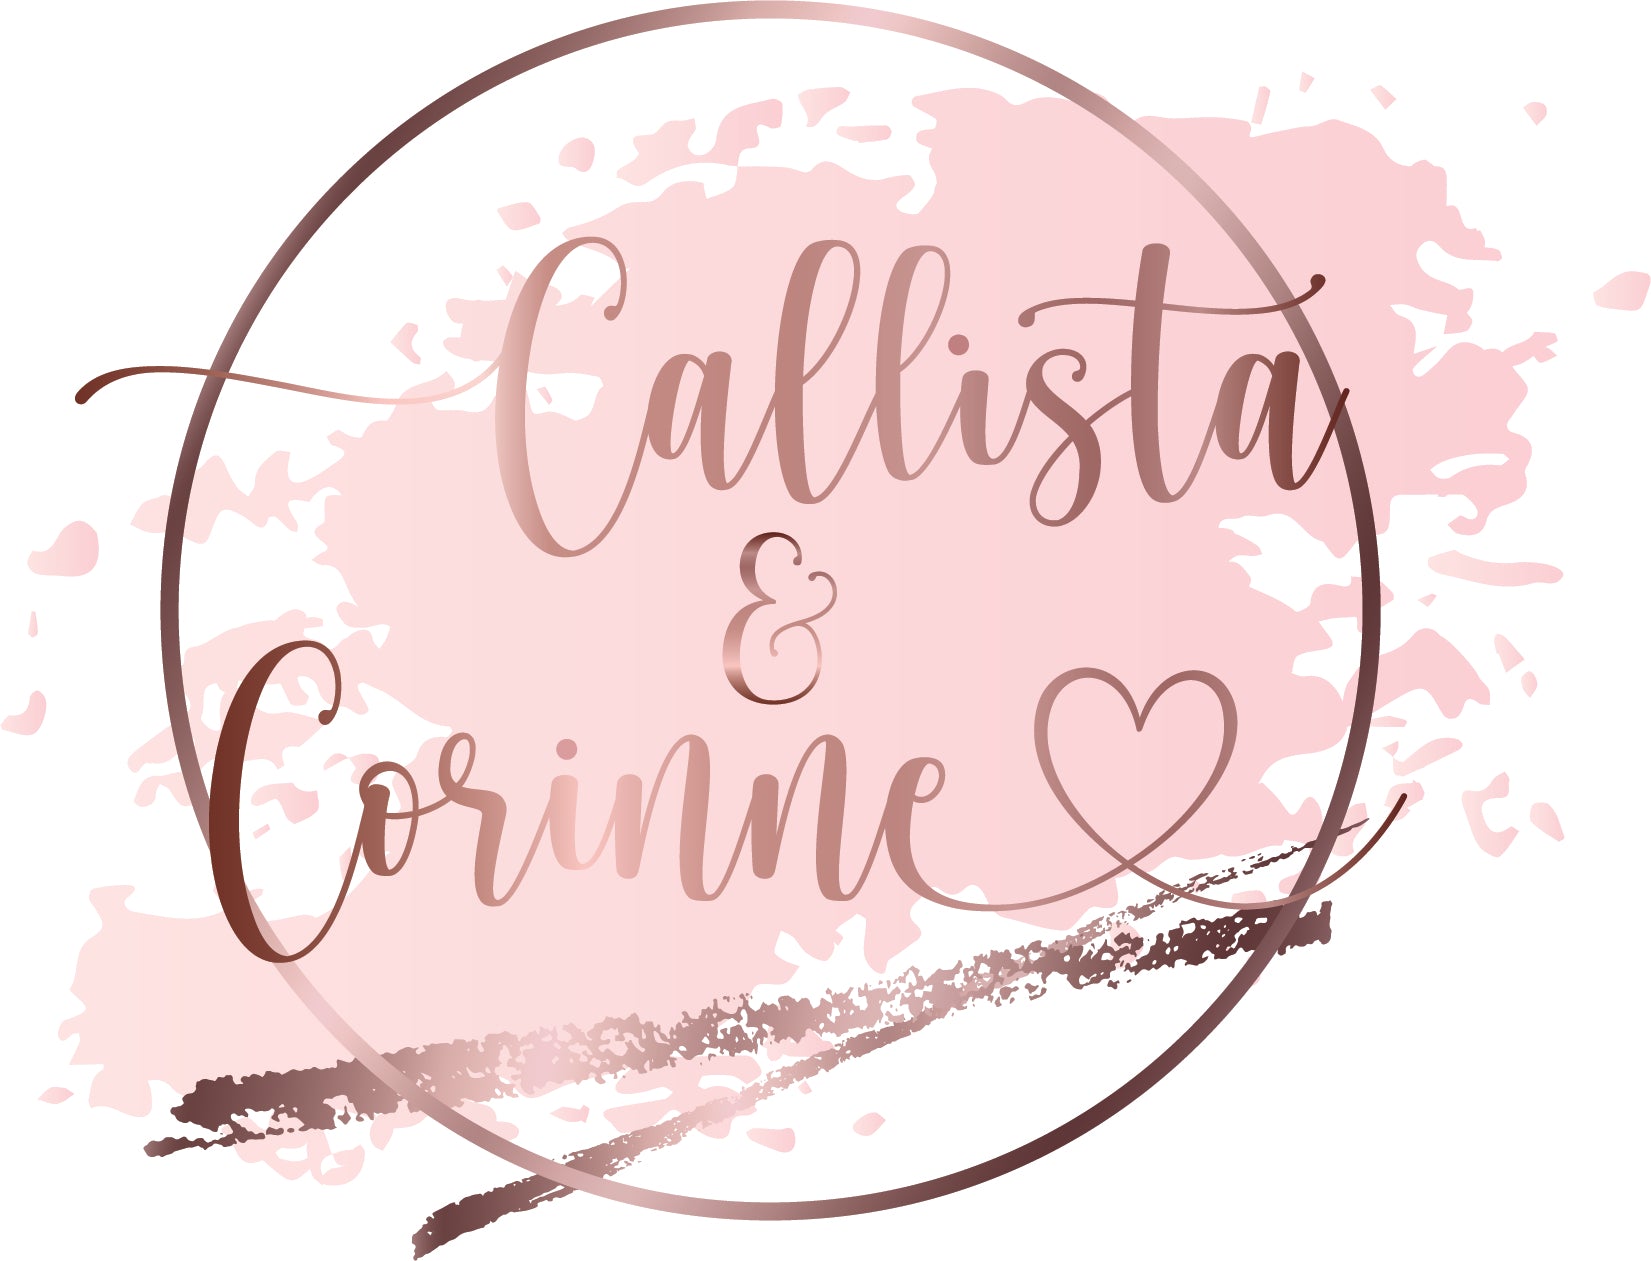 Callista & Corinne